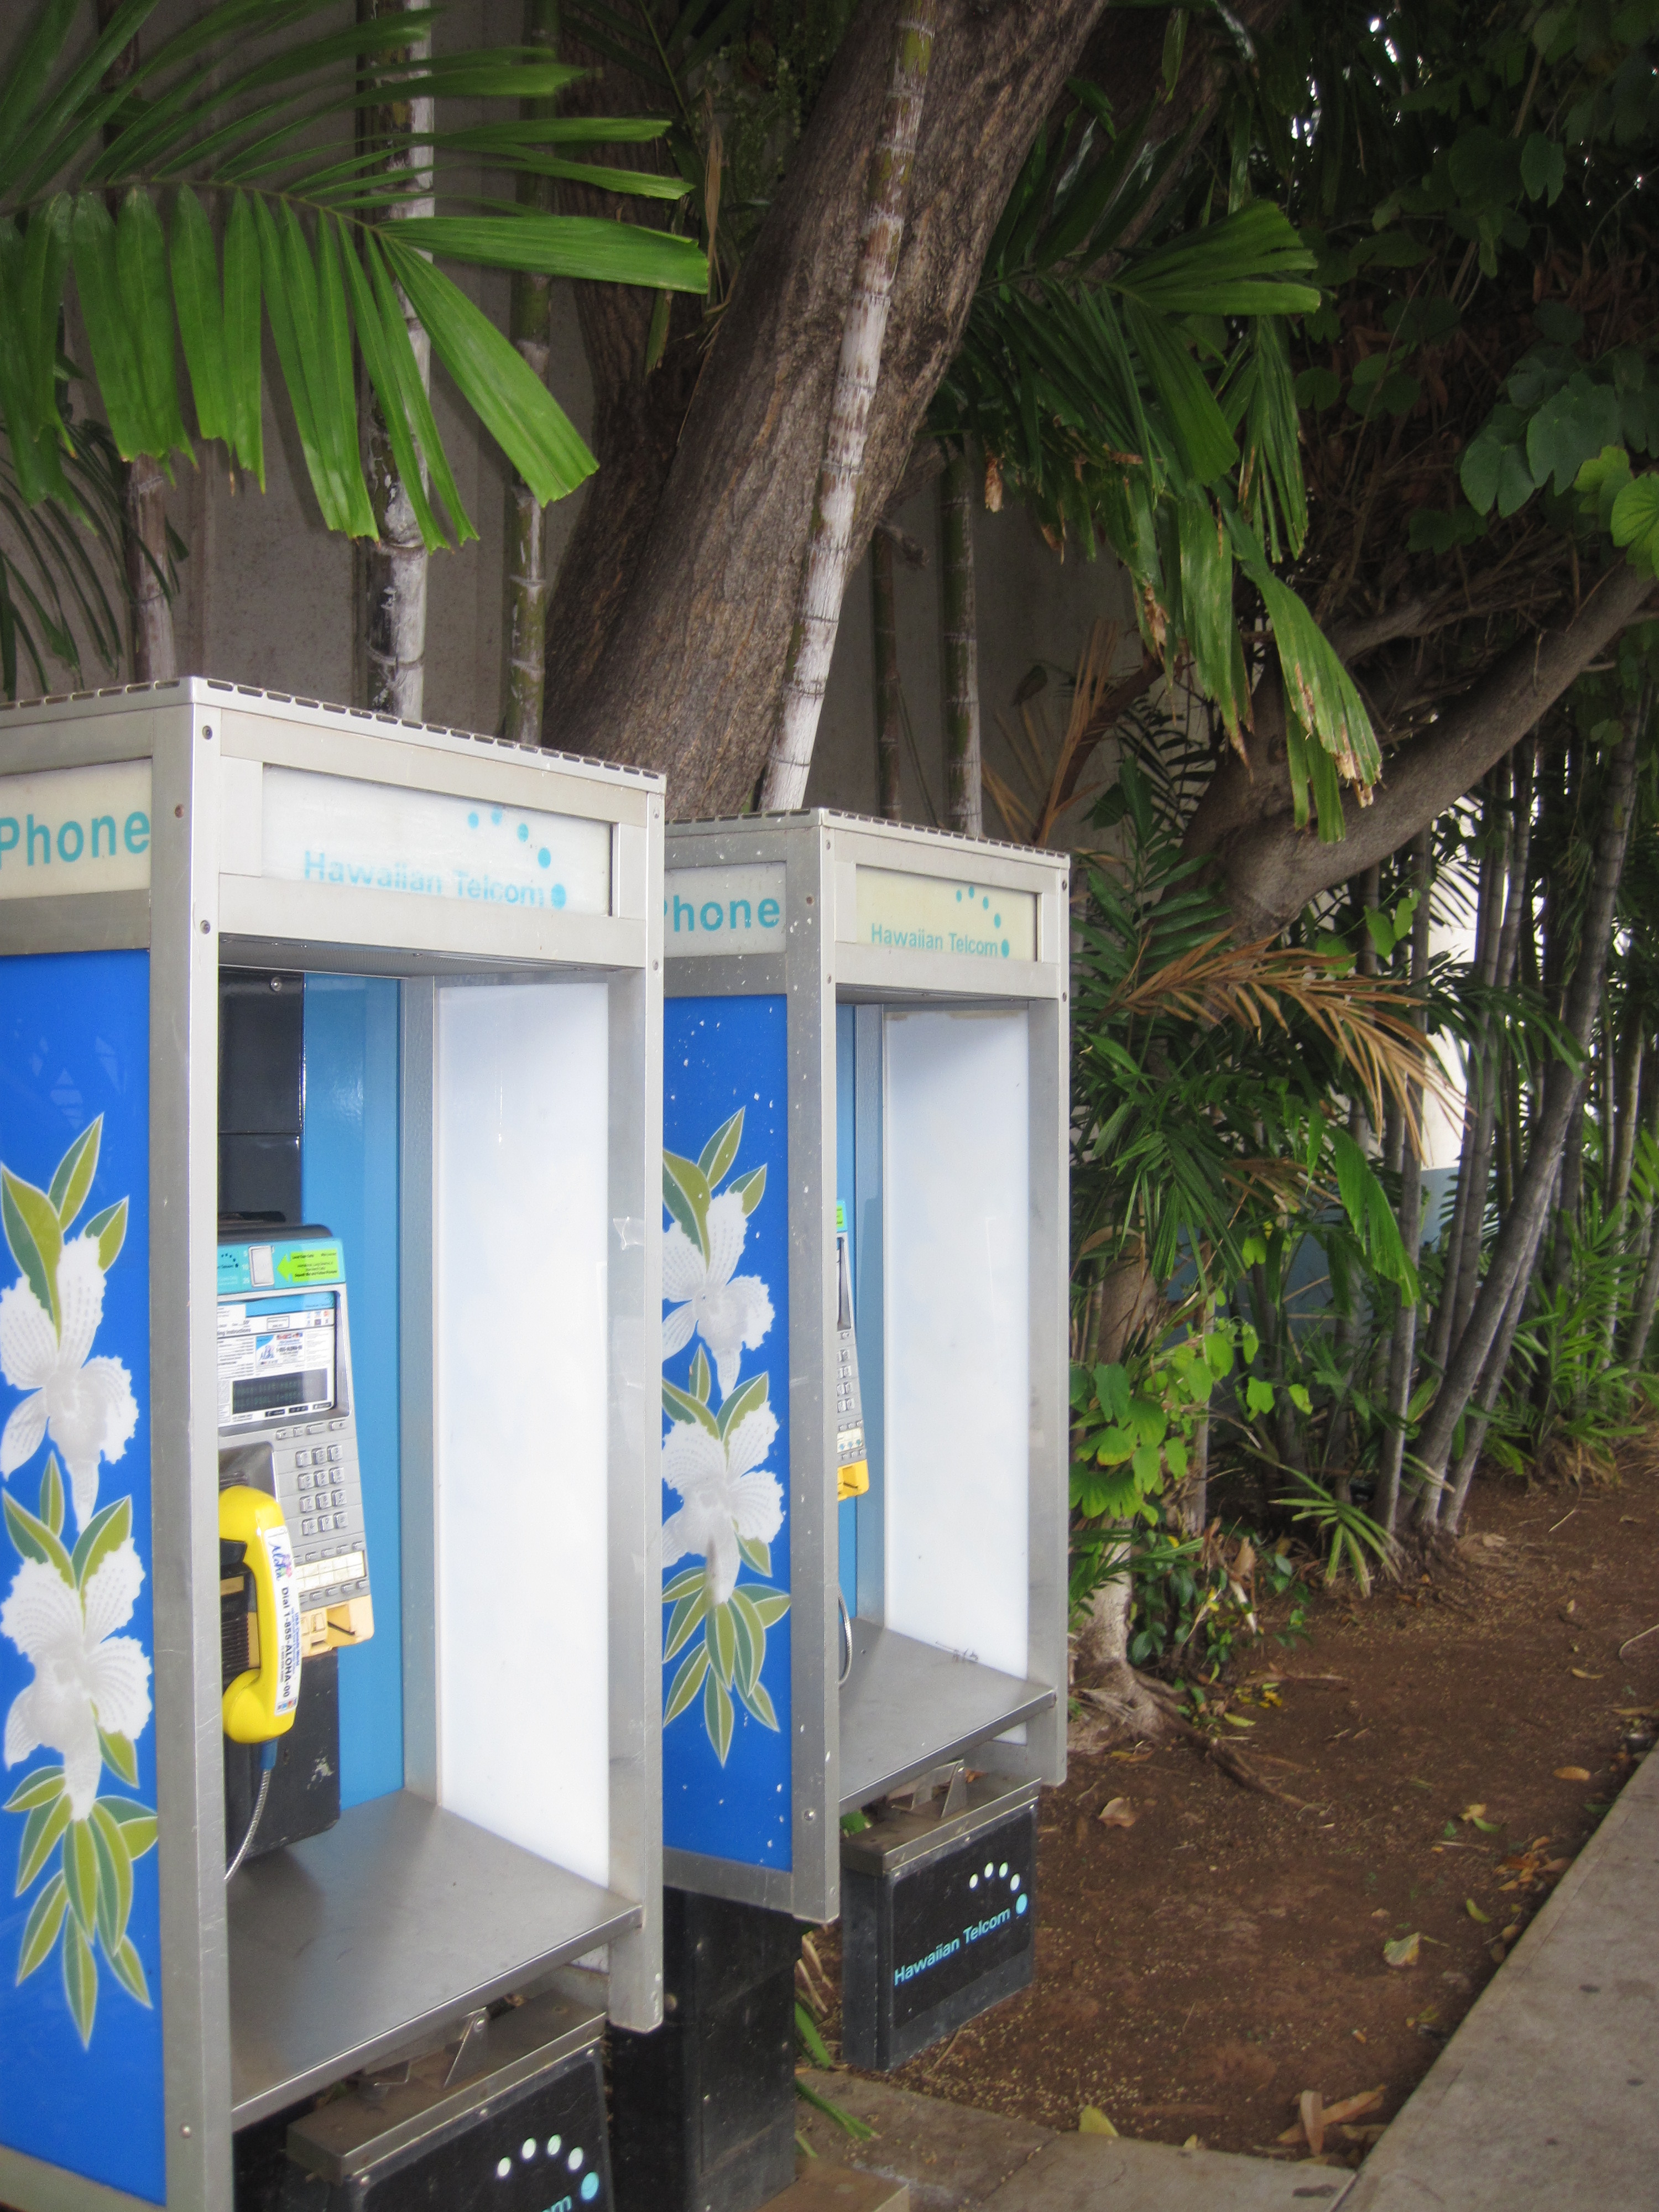 phone booths